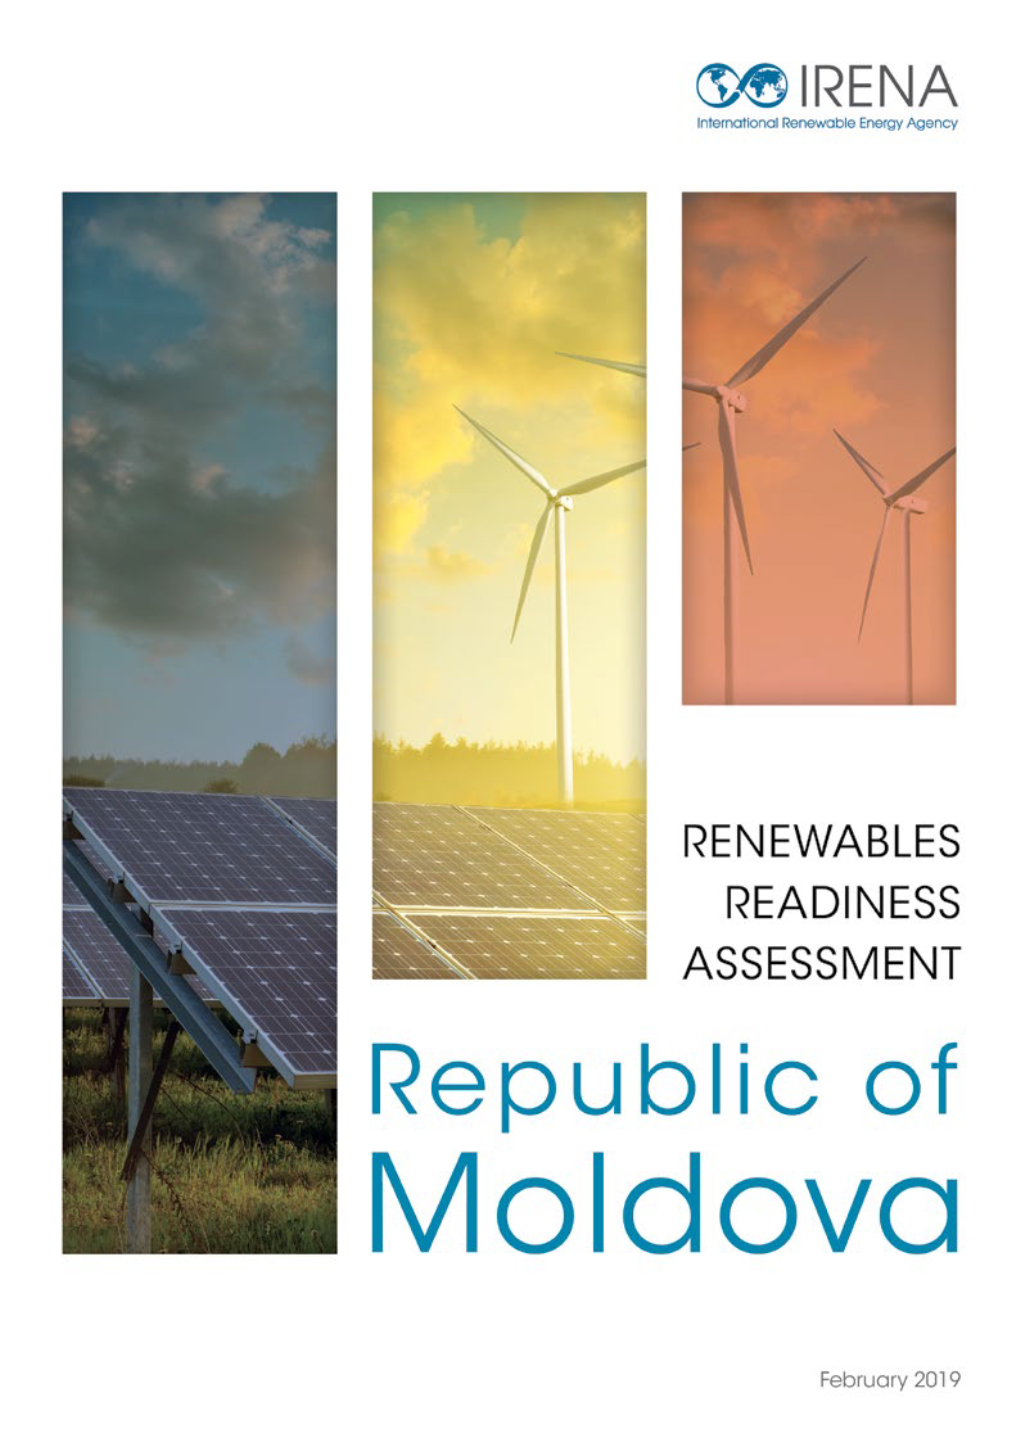 Renewables Readiness Assessment: Republic of Moldova, International Renewable Energy Agency, Abu Dhabi